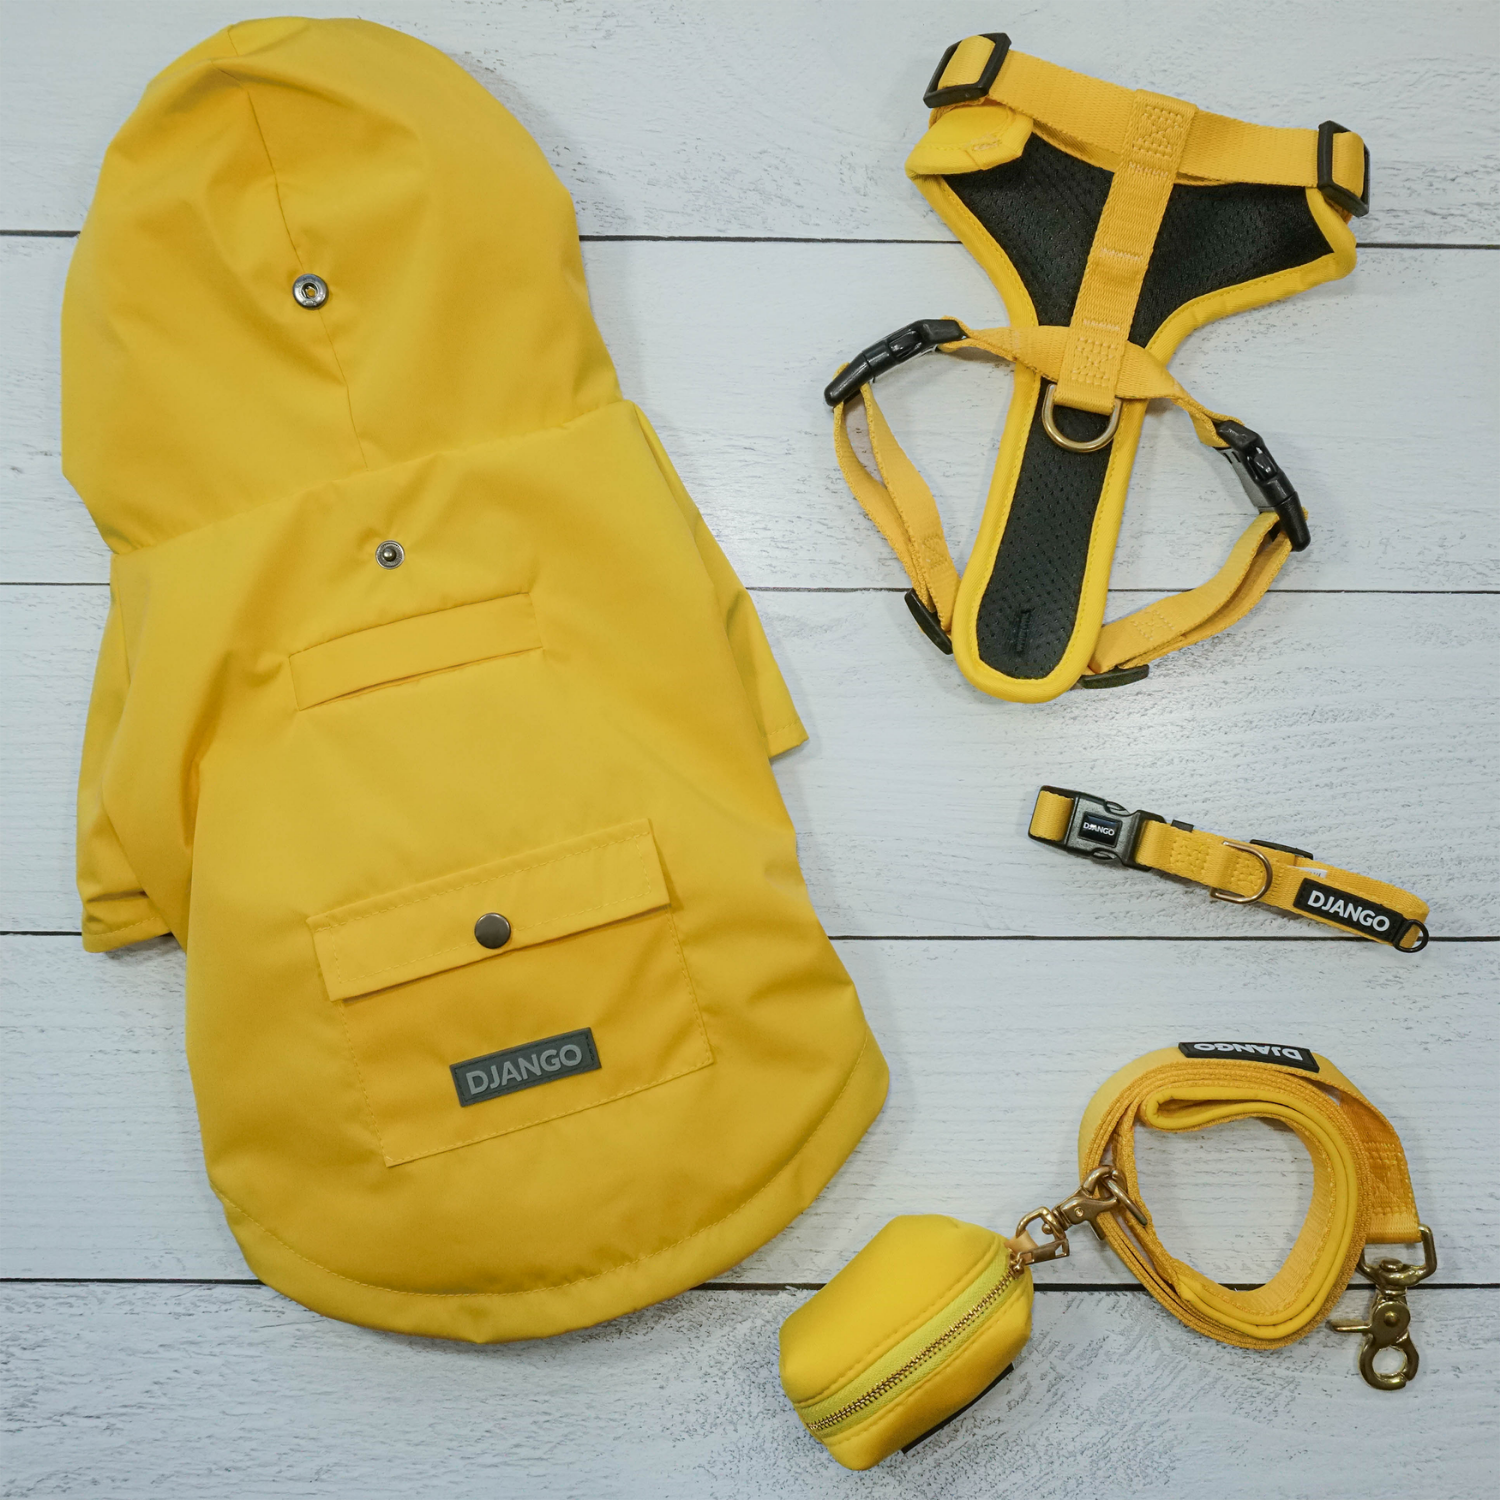 Pair your Dandelion Yellow Django poop bag holder with your Dandelion Yellow Django dog harness, collar, leash, and Highland Dog Jacket & Raincoat - djangobrand.com